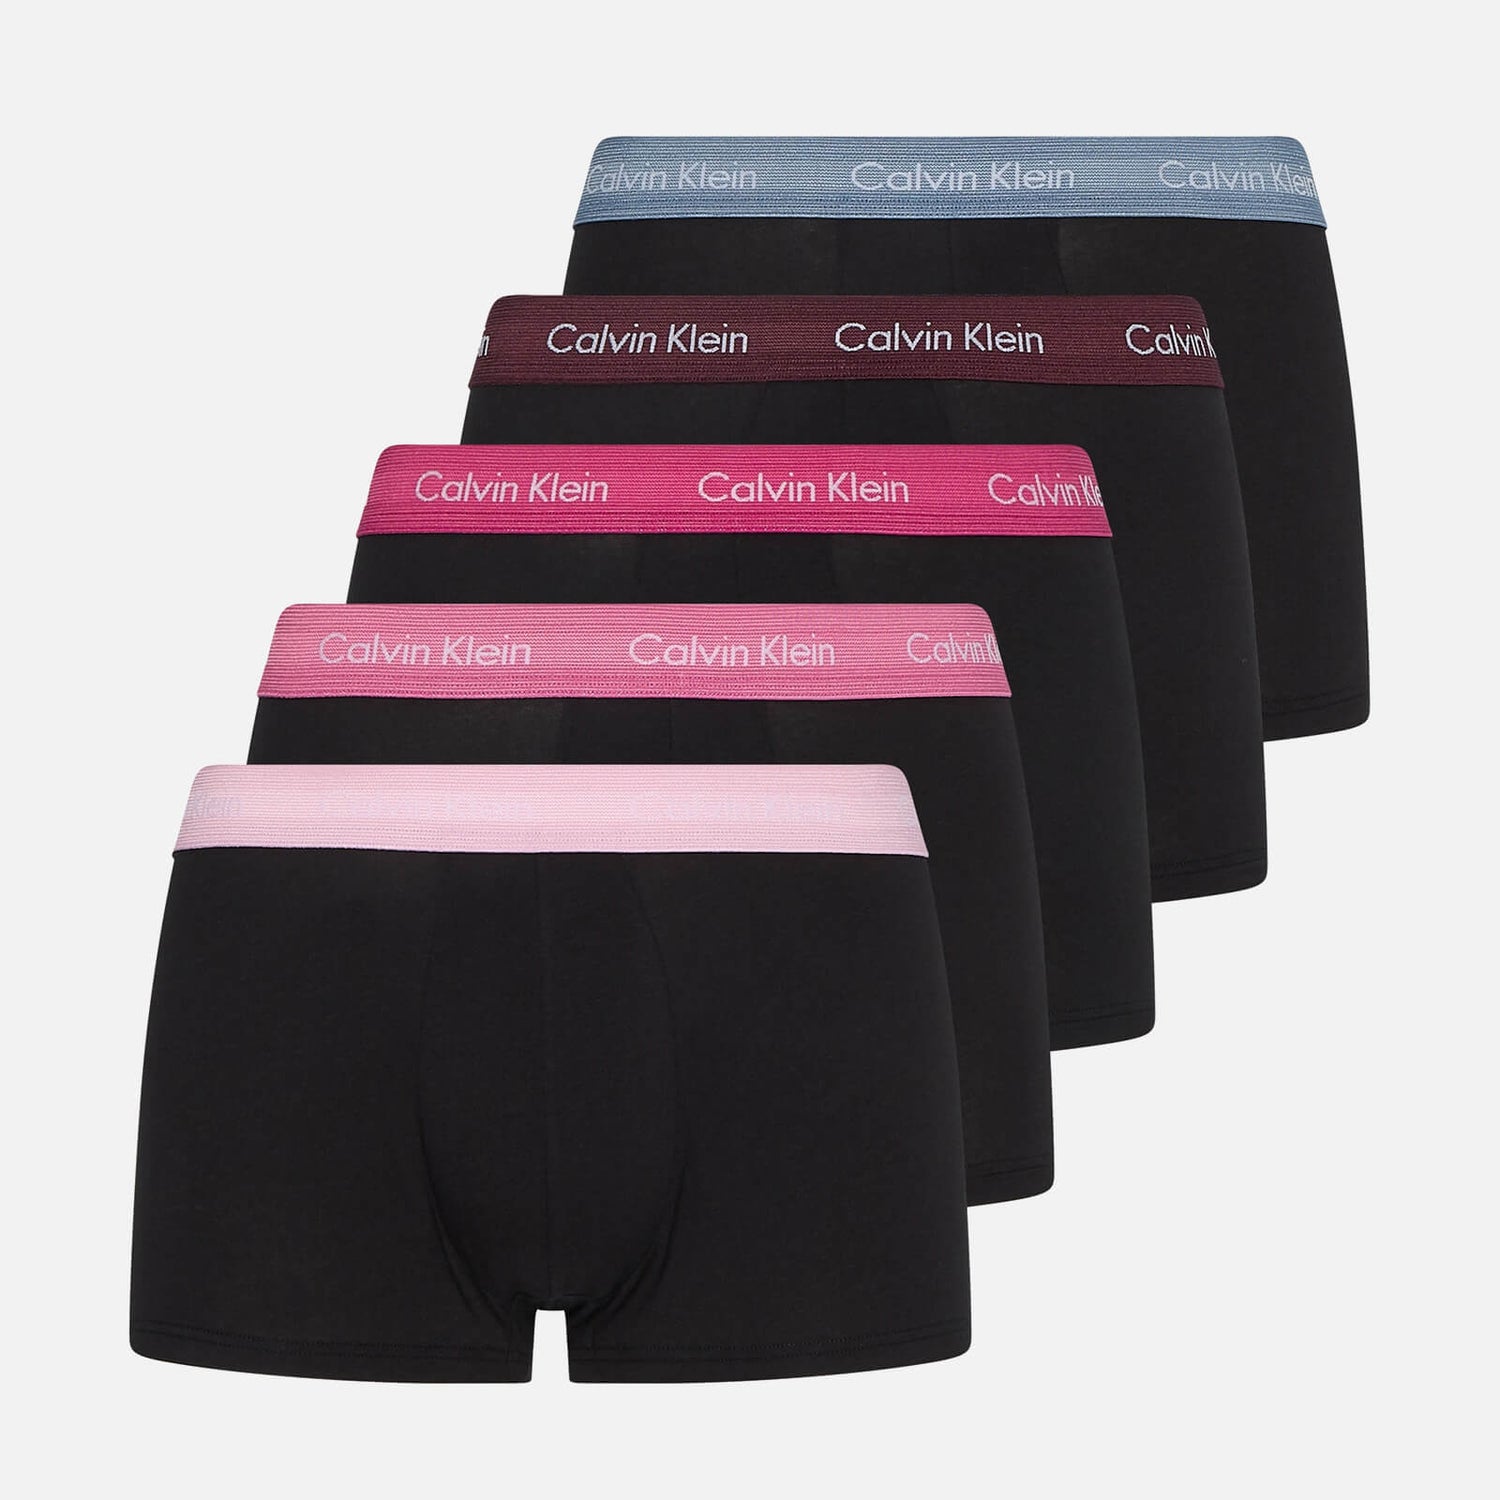 Calvin Klein Men's 5 Pack Low Rise Trunk Boxer Shorts - Black/Multi - XL